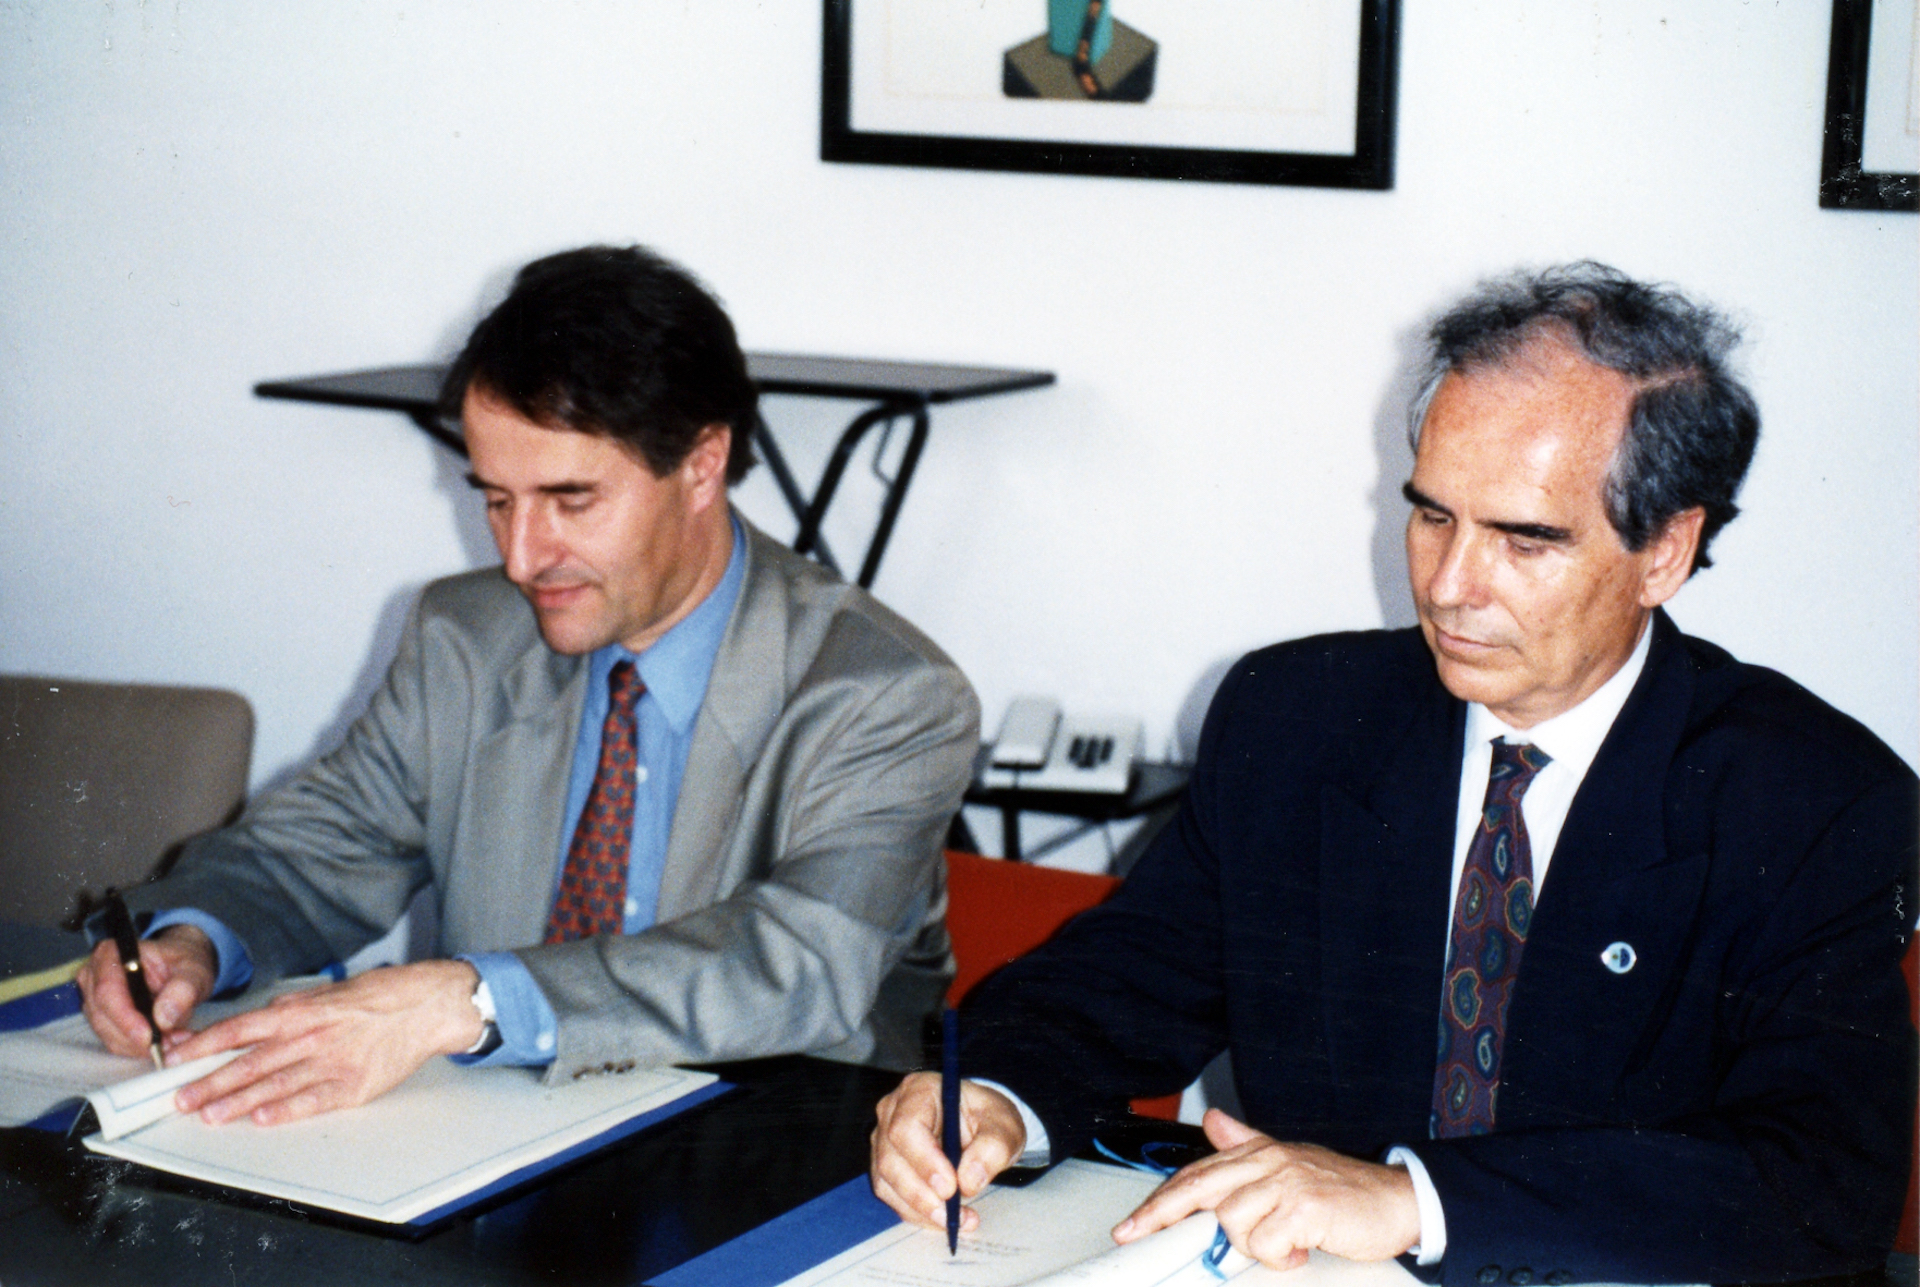 IAC-ESA 1994